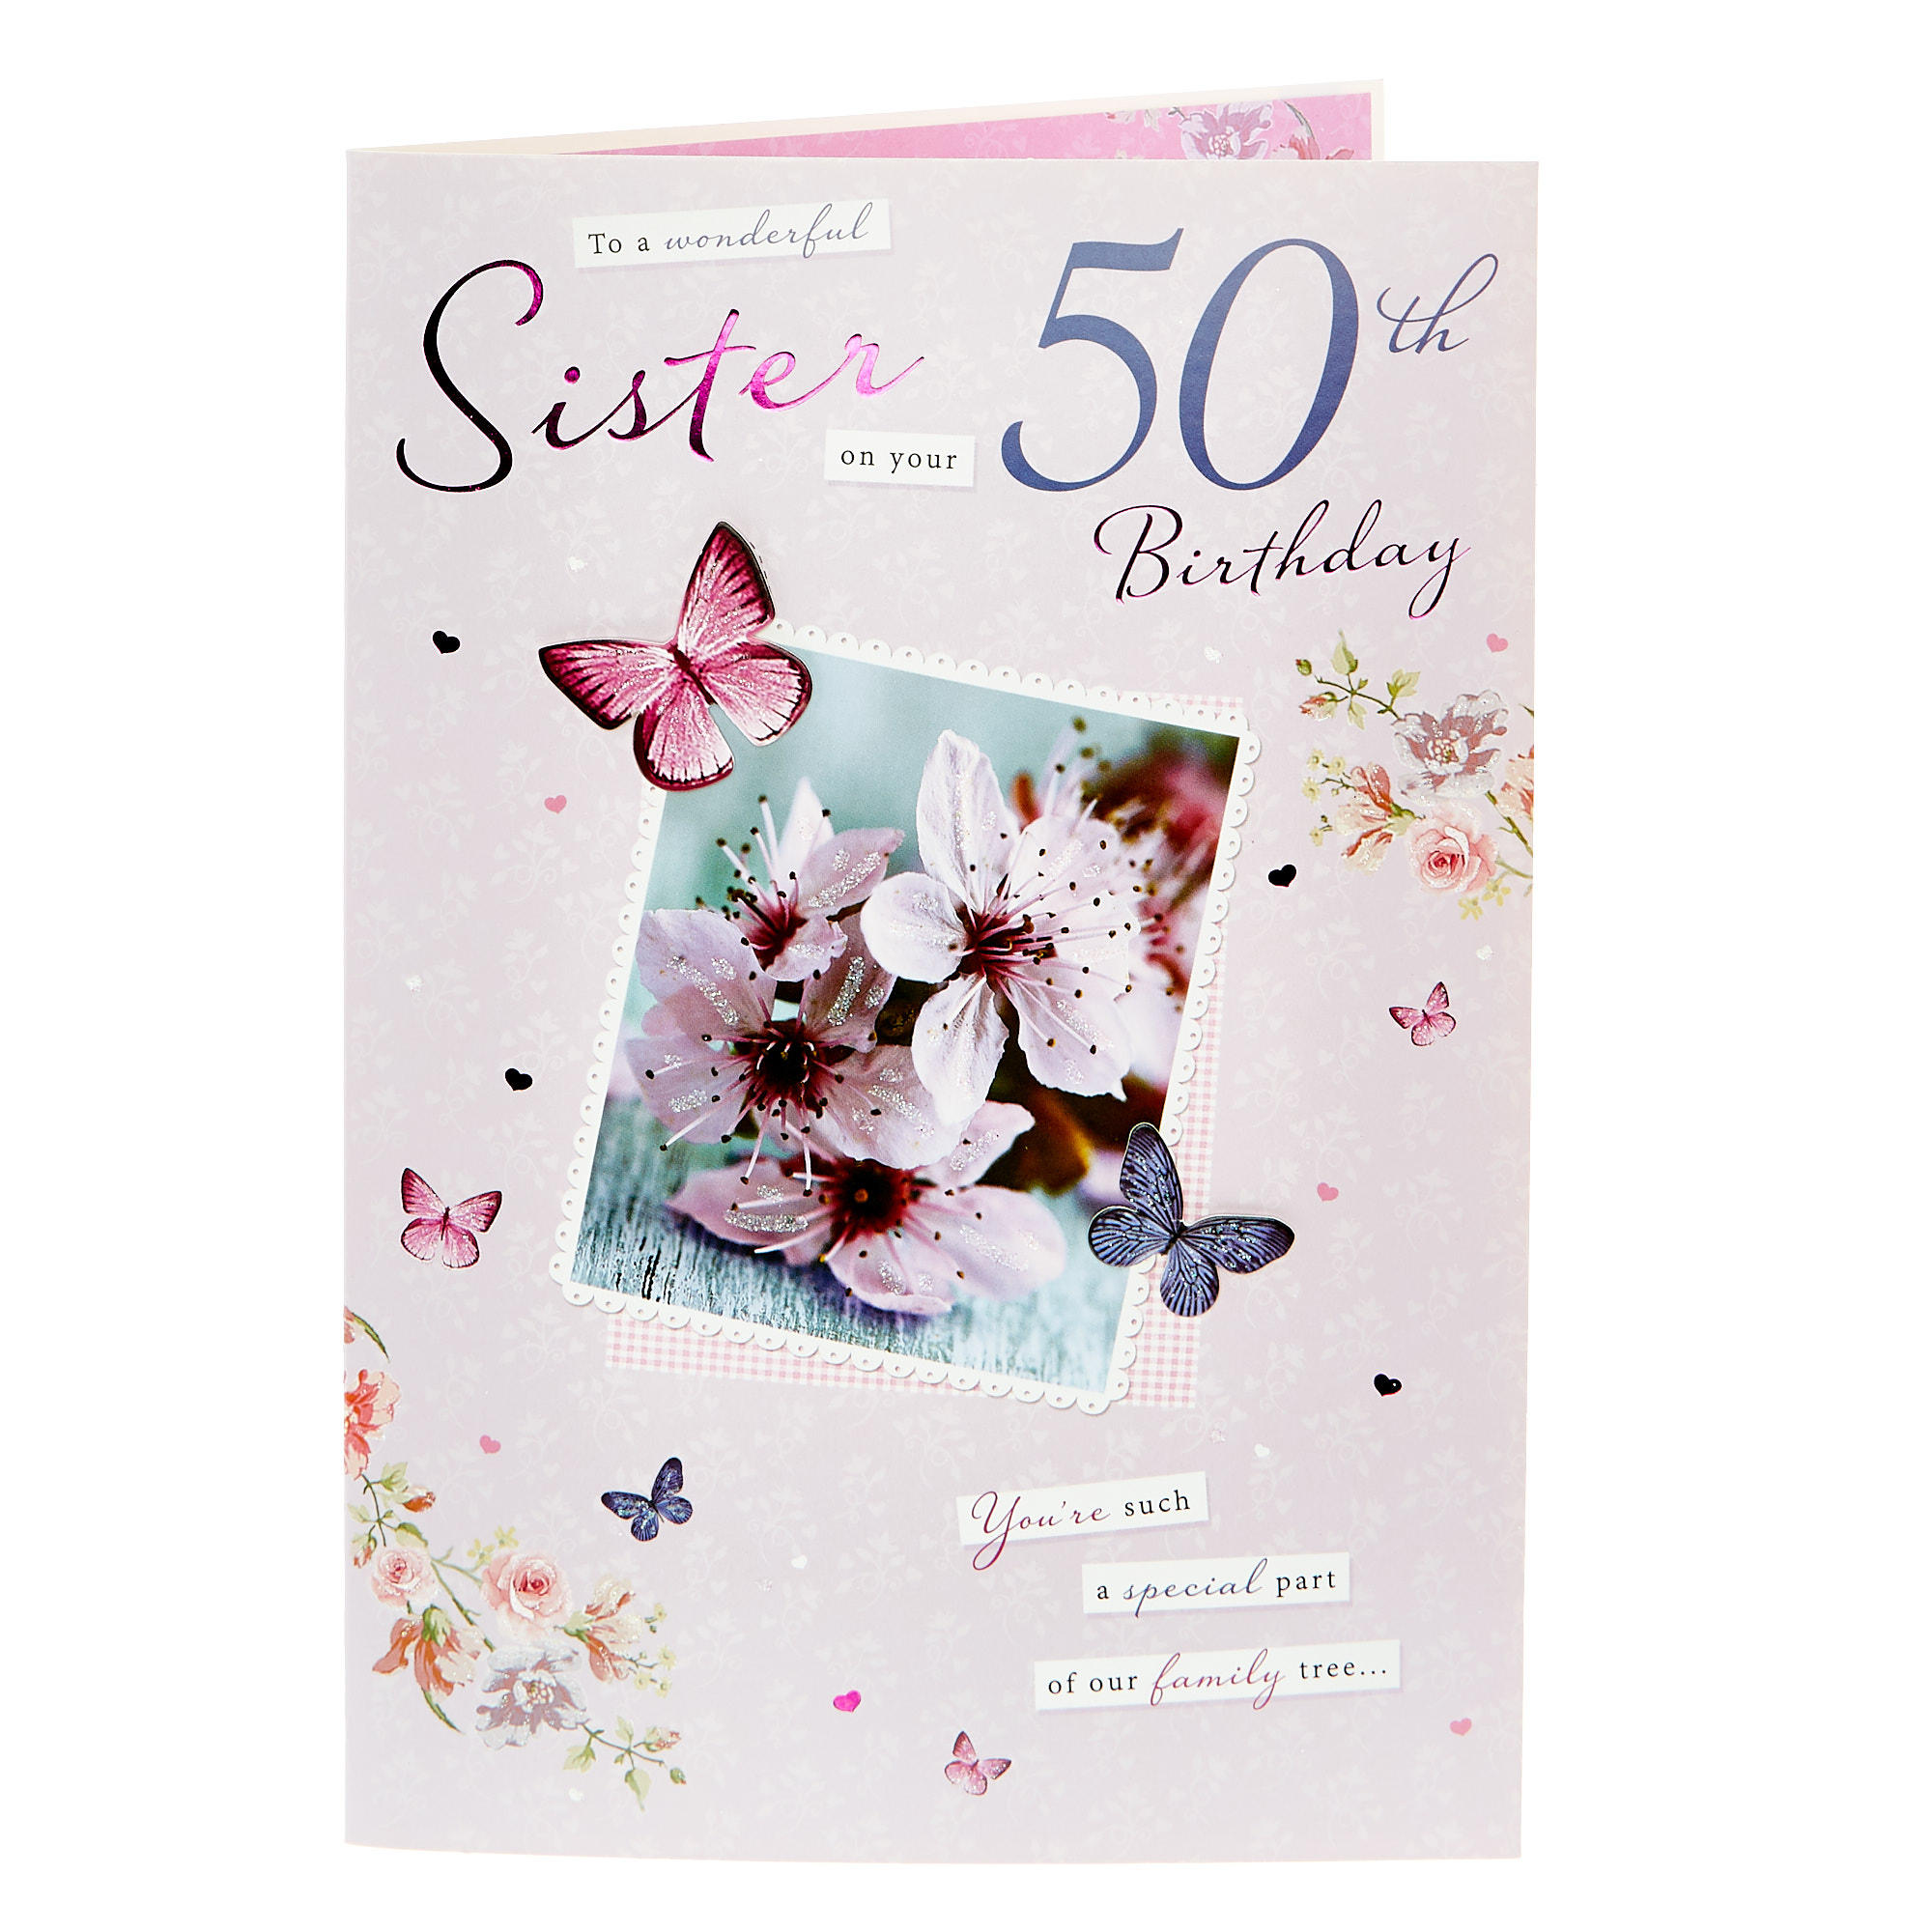 50th Birthday Card - Wonderful Sister, Butterflies